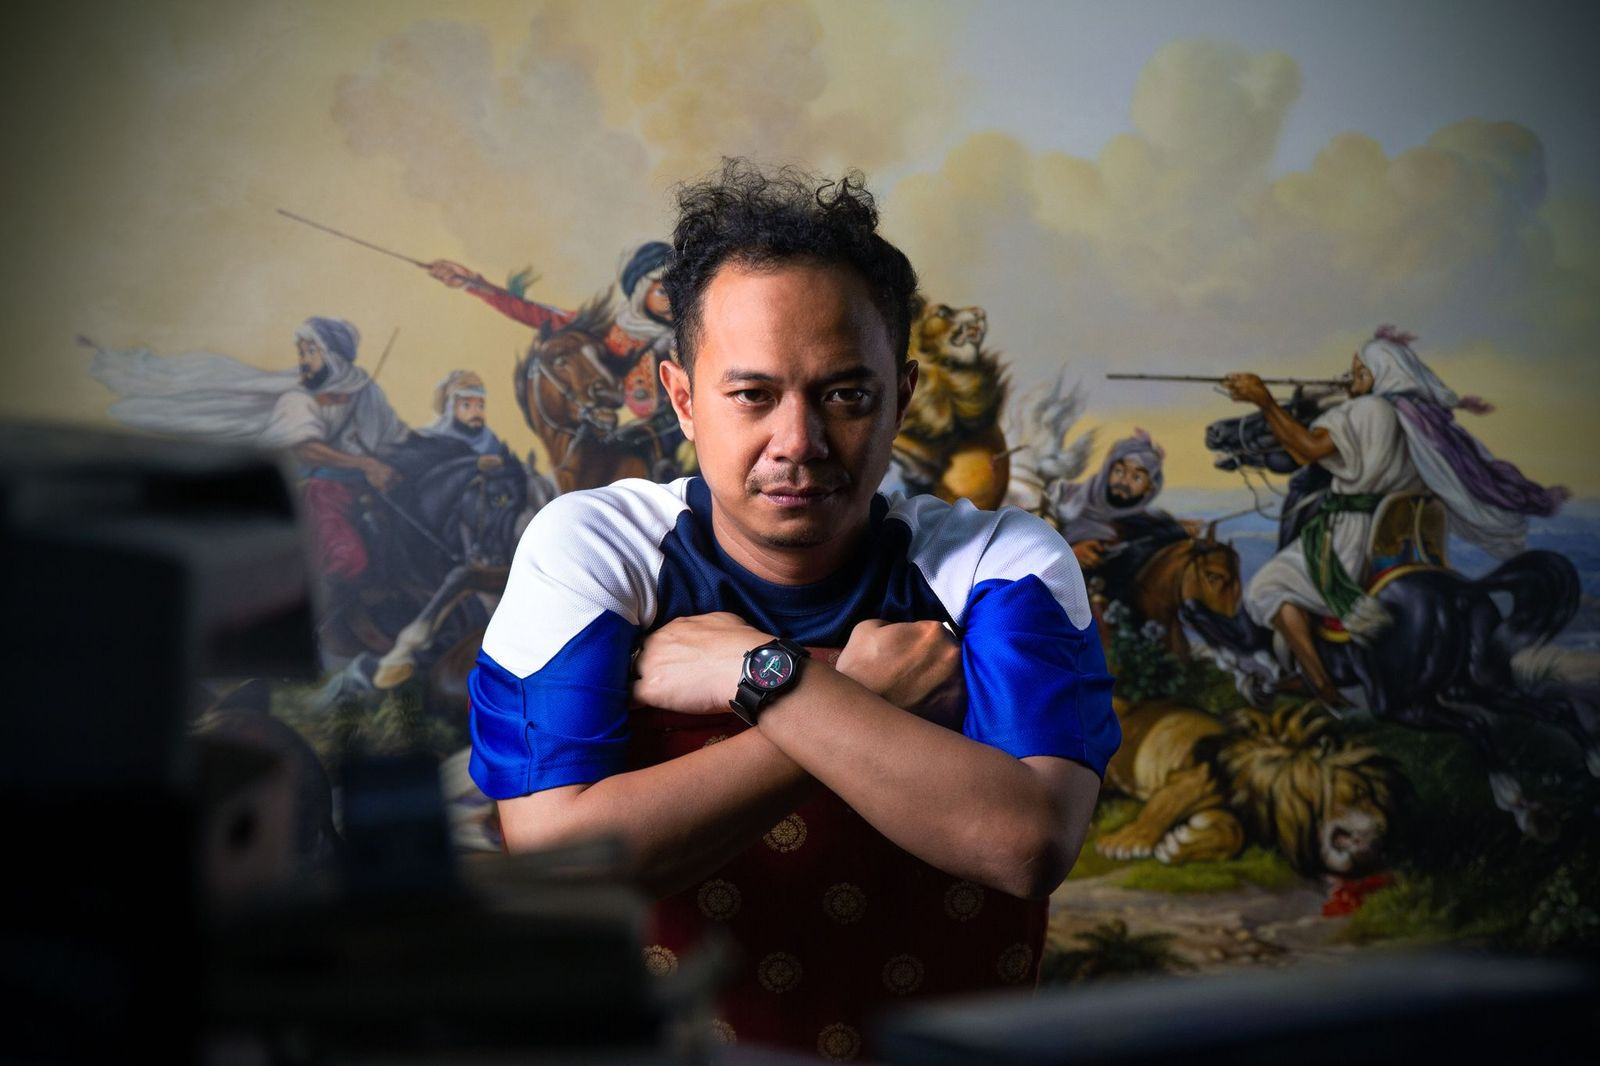 Timex Gandeng Seniman Yogyakarta, Hadirkan Jam Tangan Bertema Silent Operations